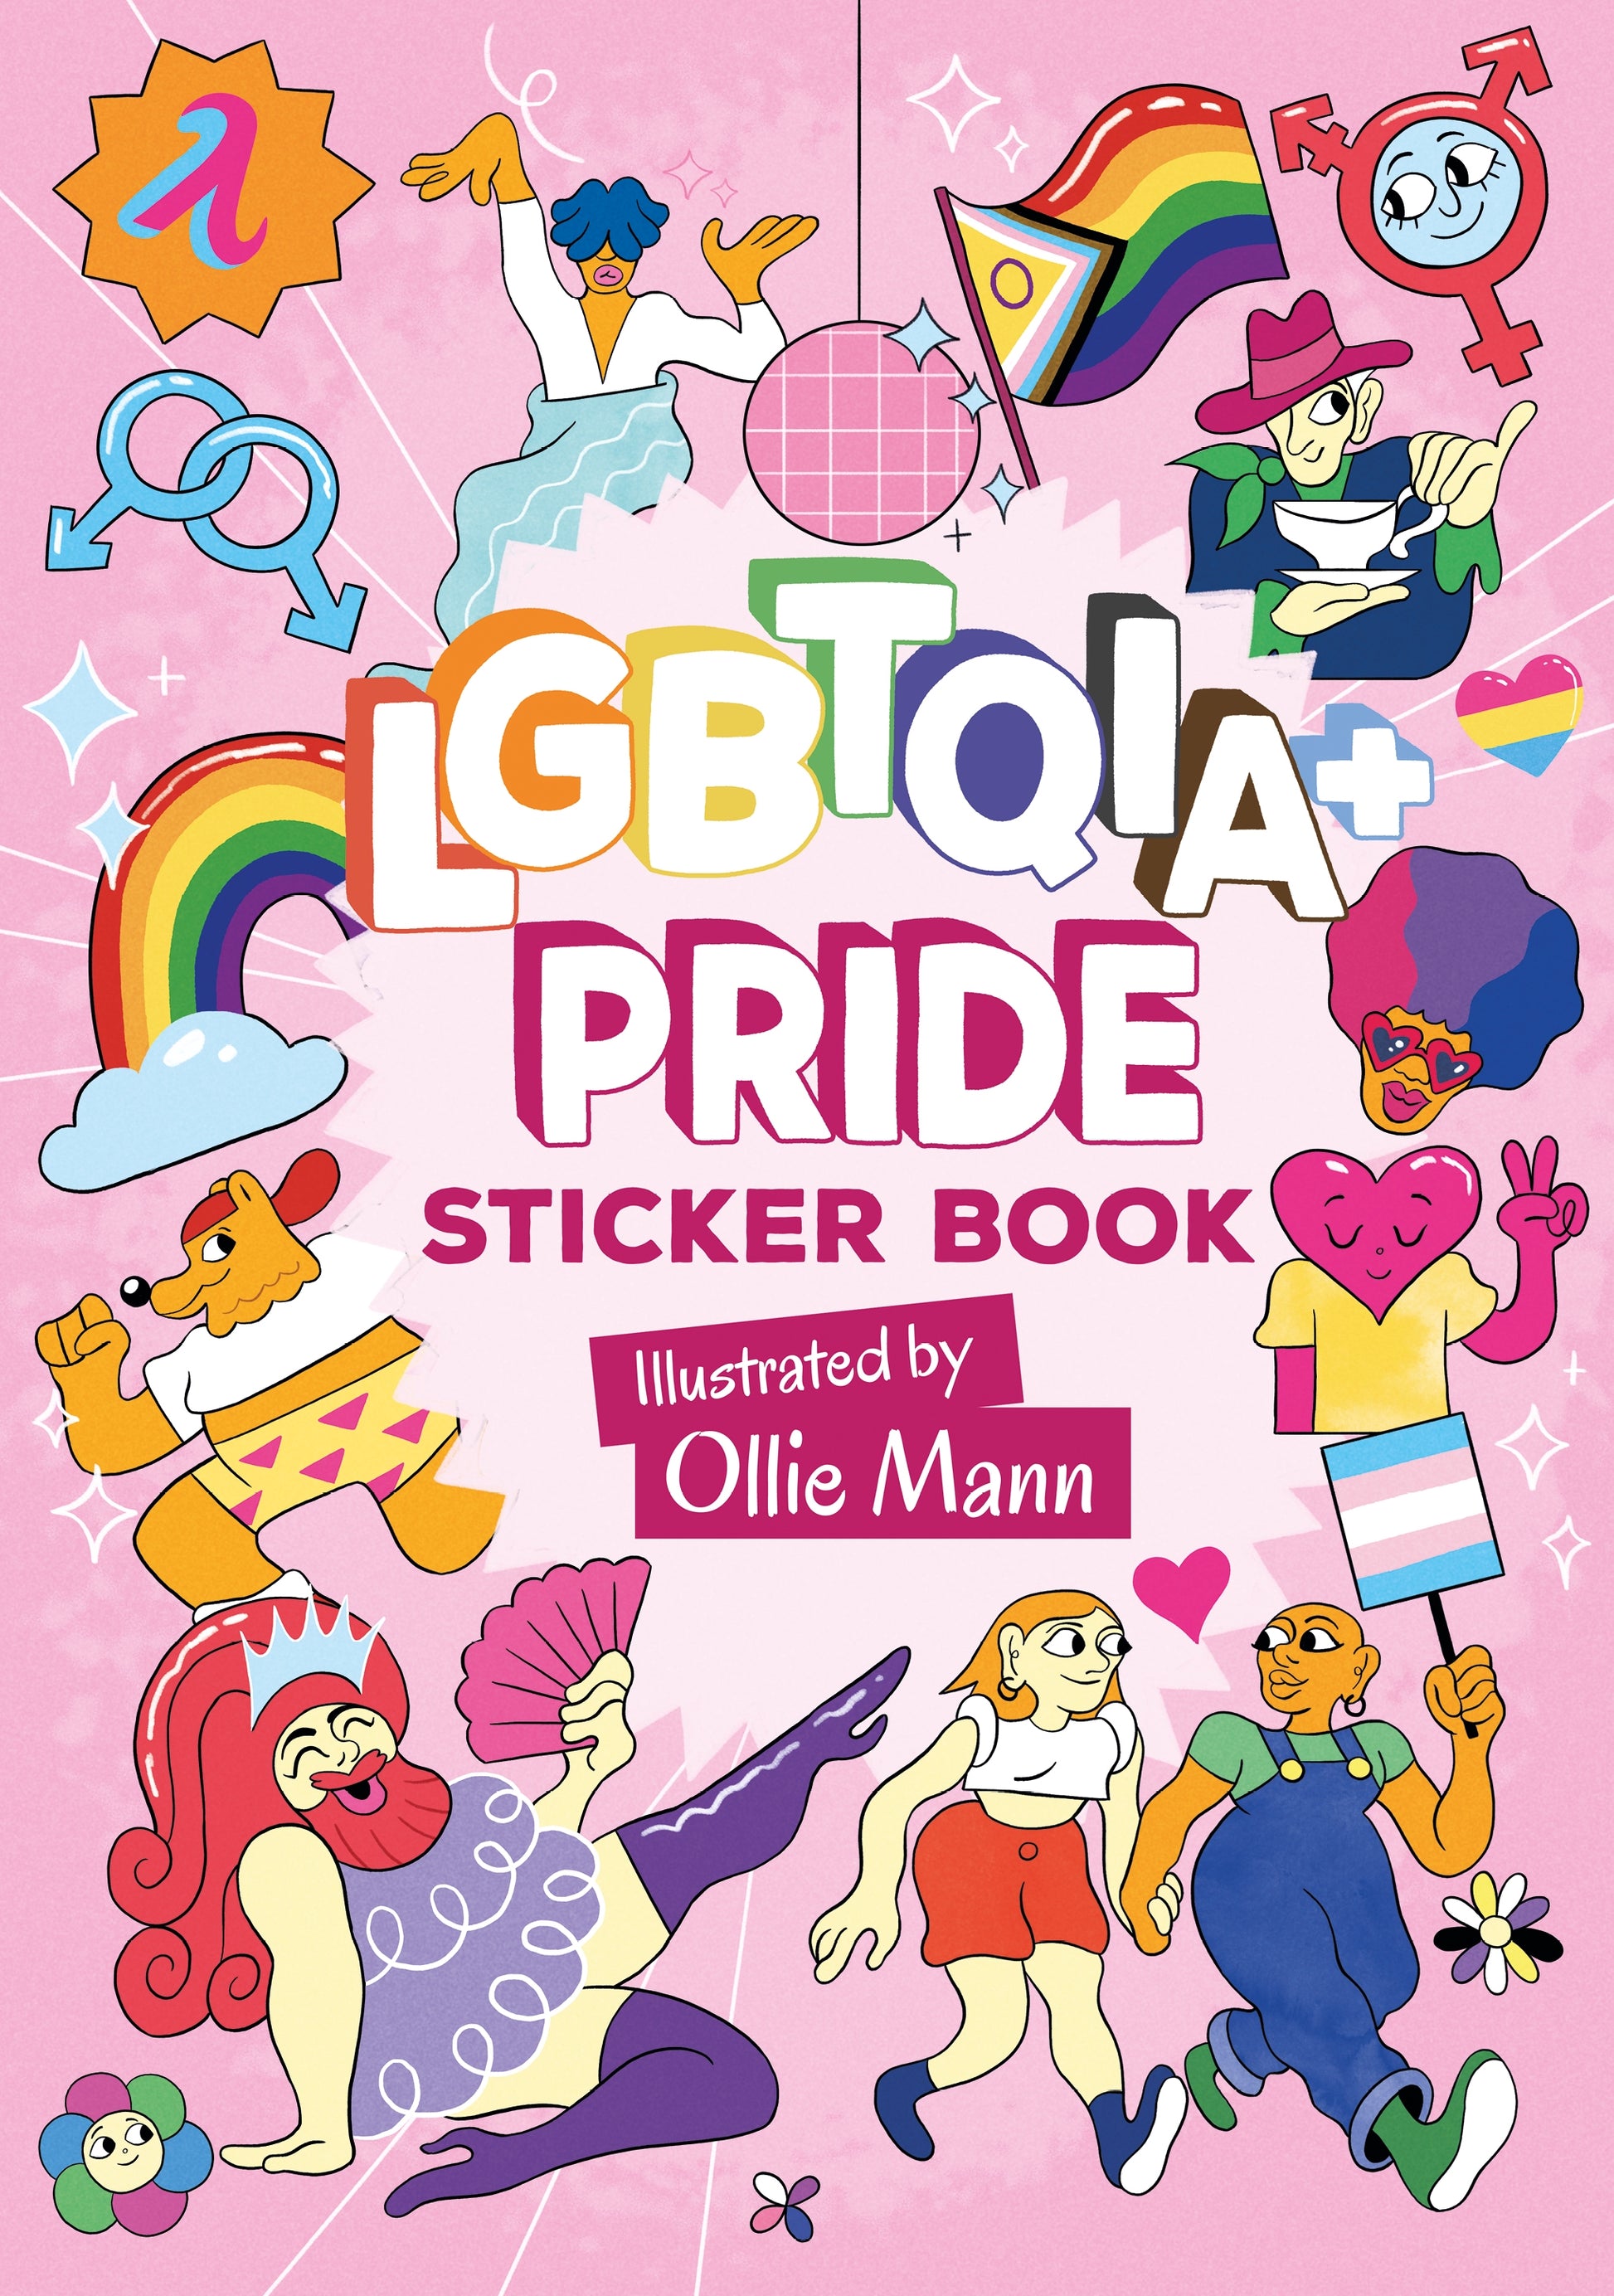 LGBTQIA+ Pride Sticker Book by Ollie Mann